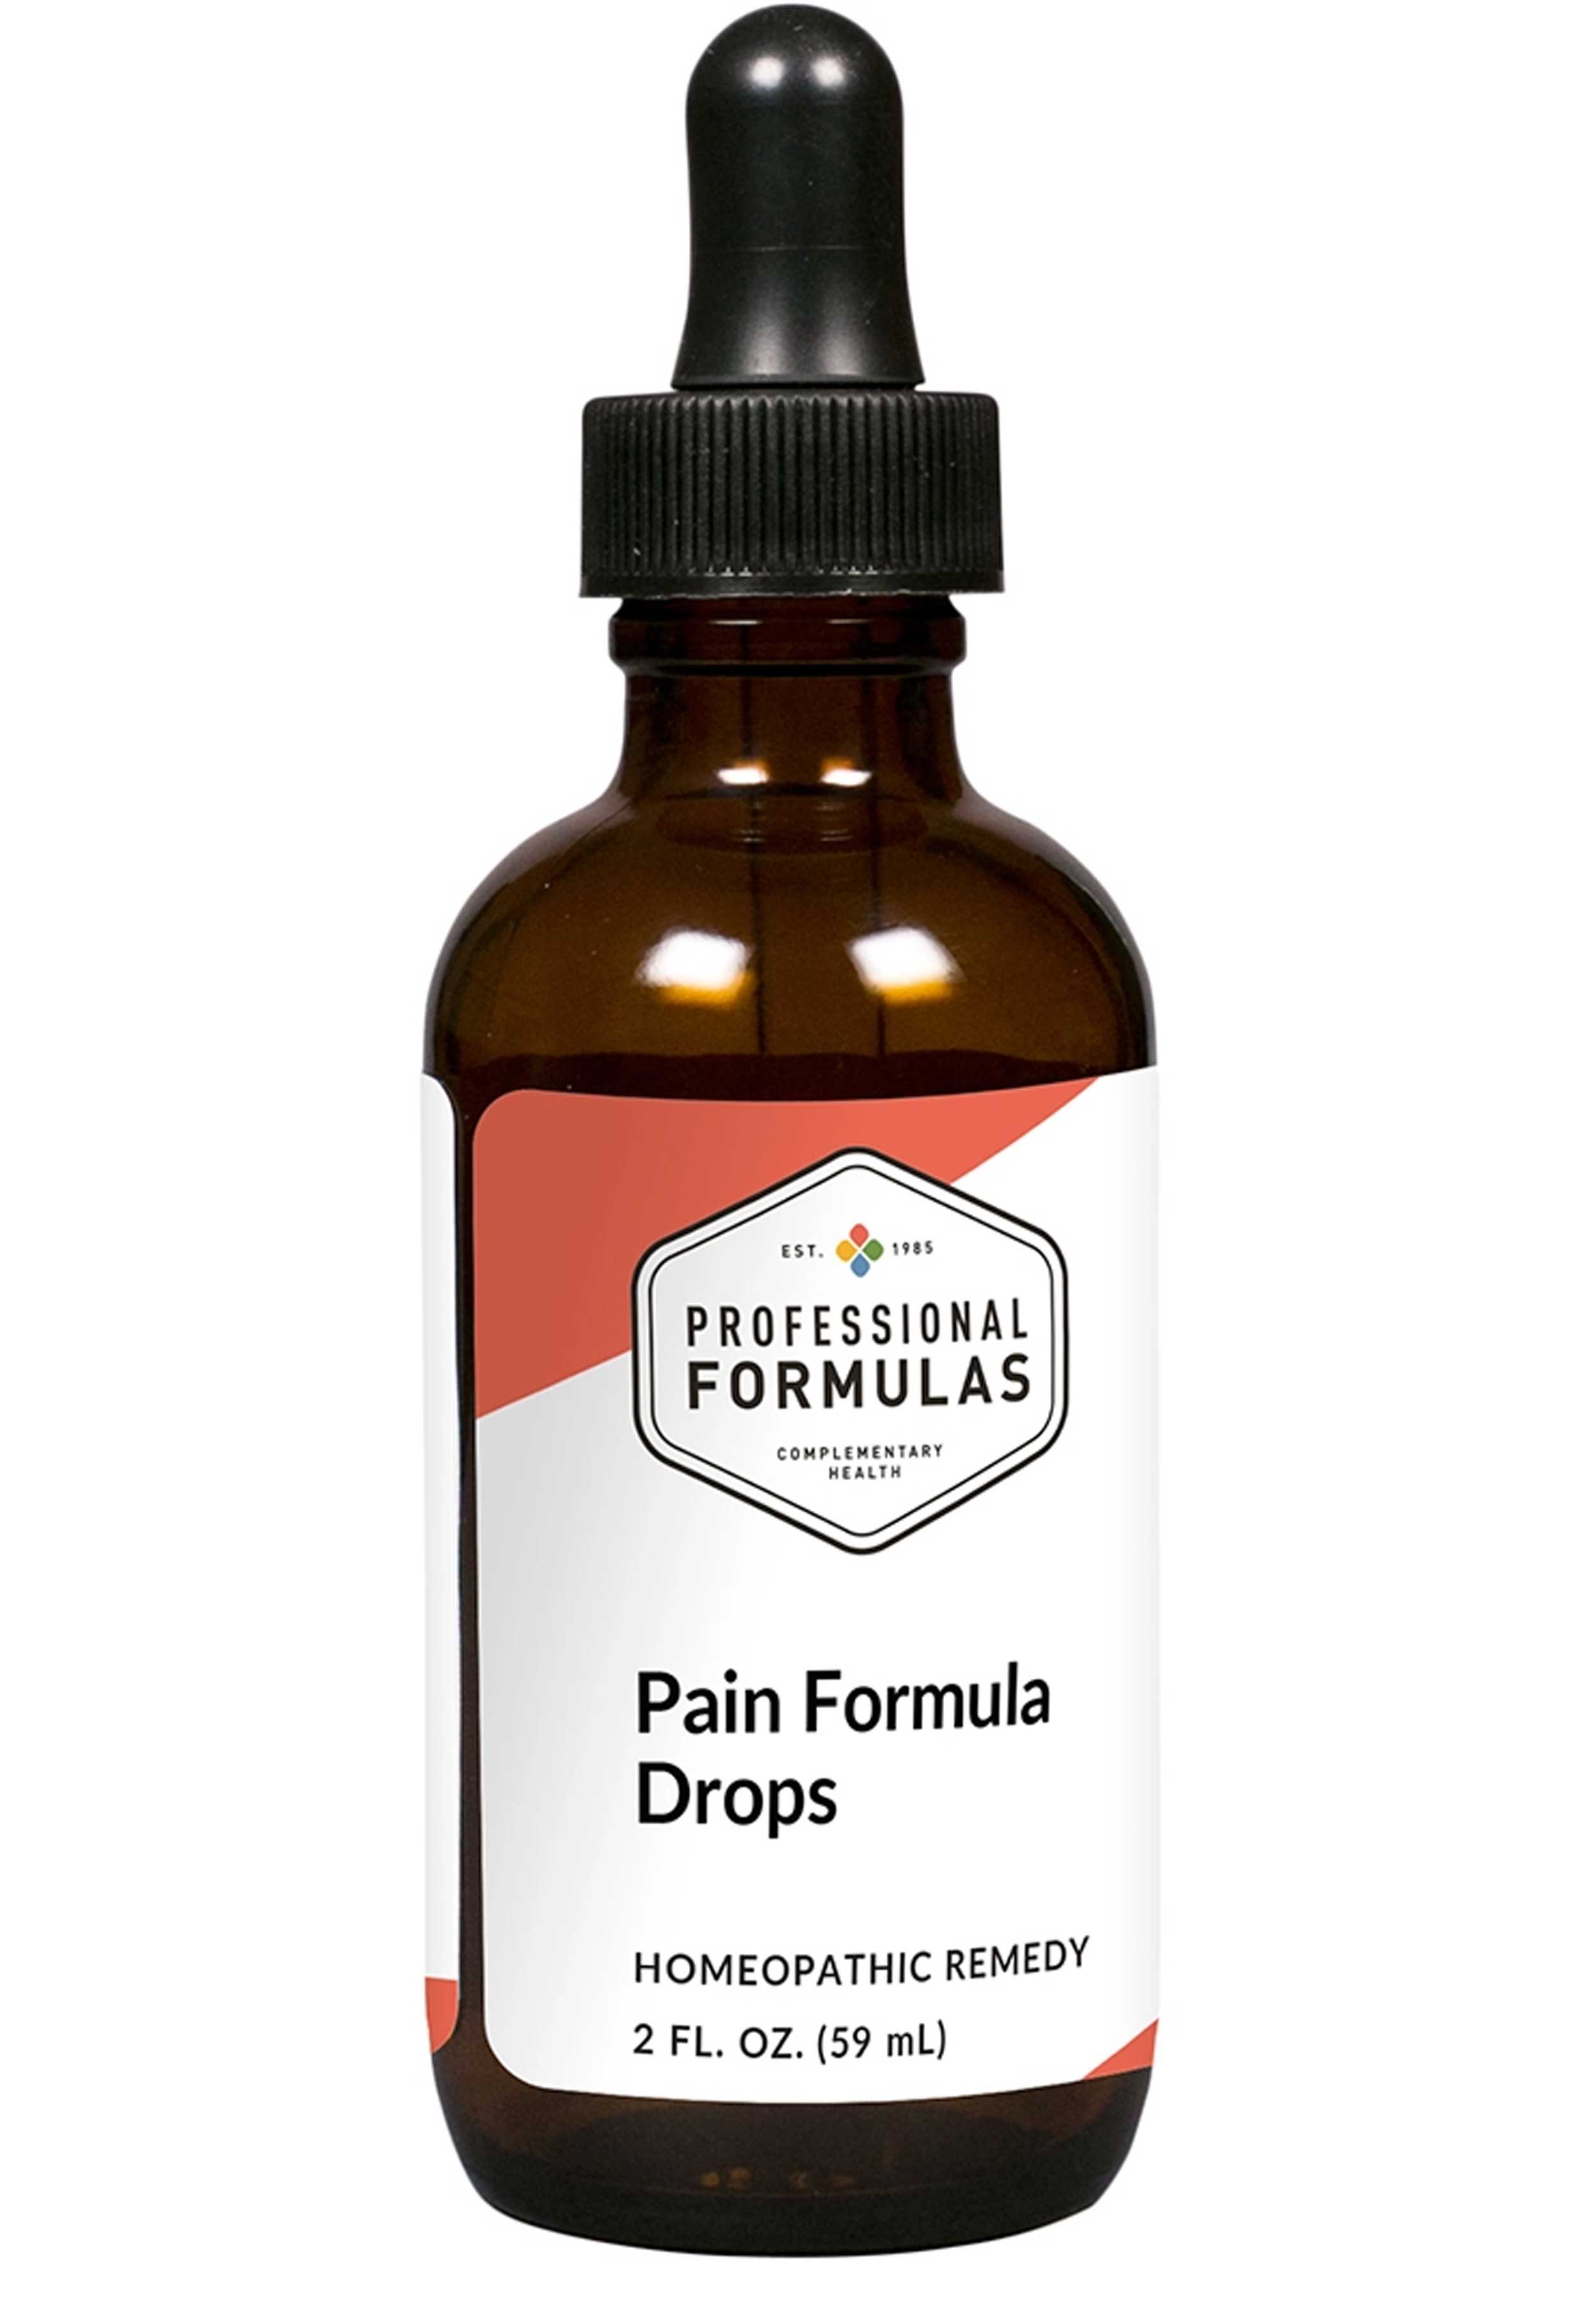 Professional Formulas Pain Formula Drops